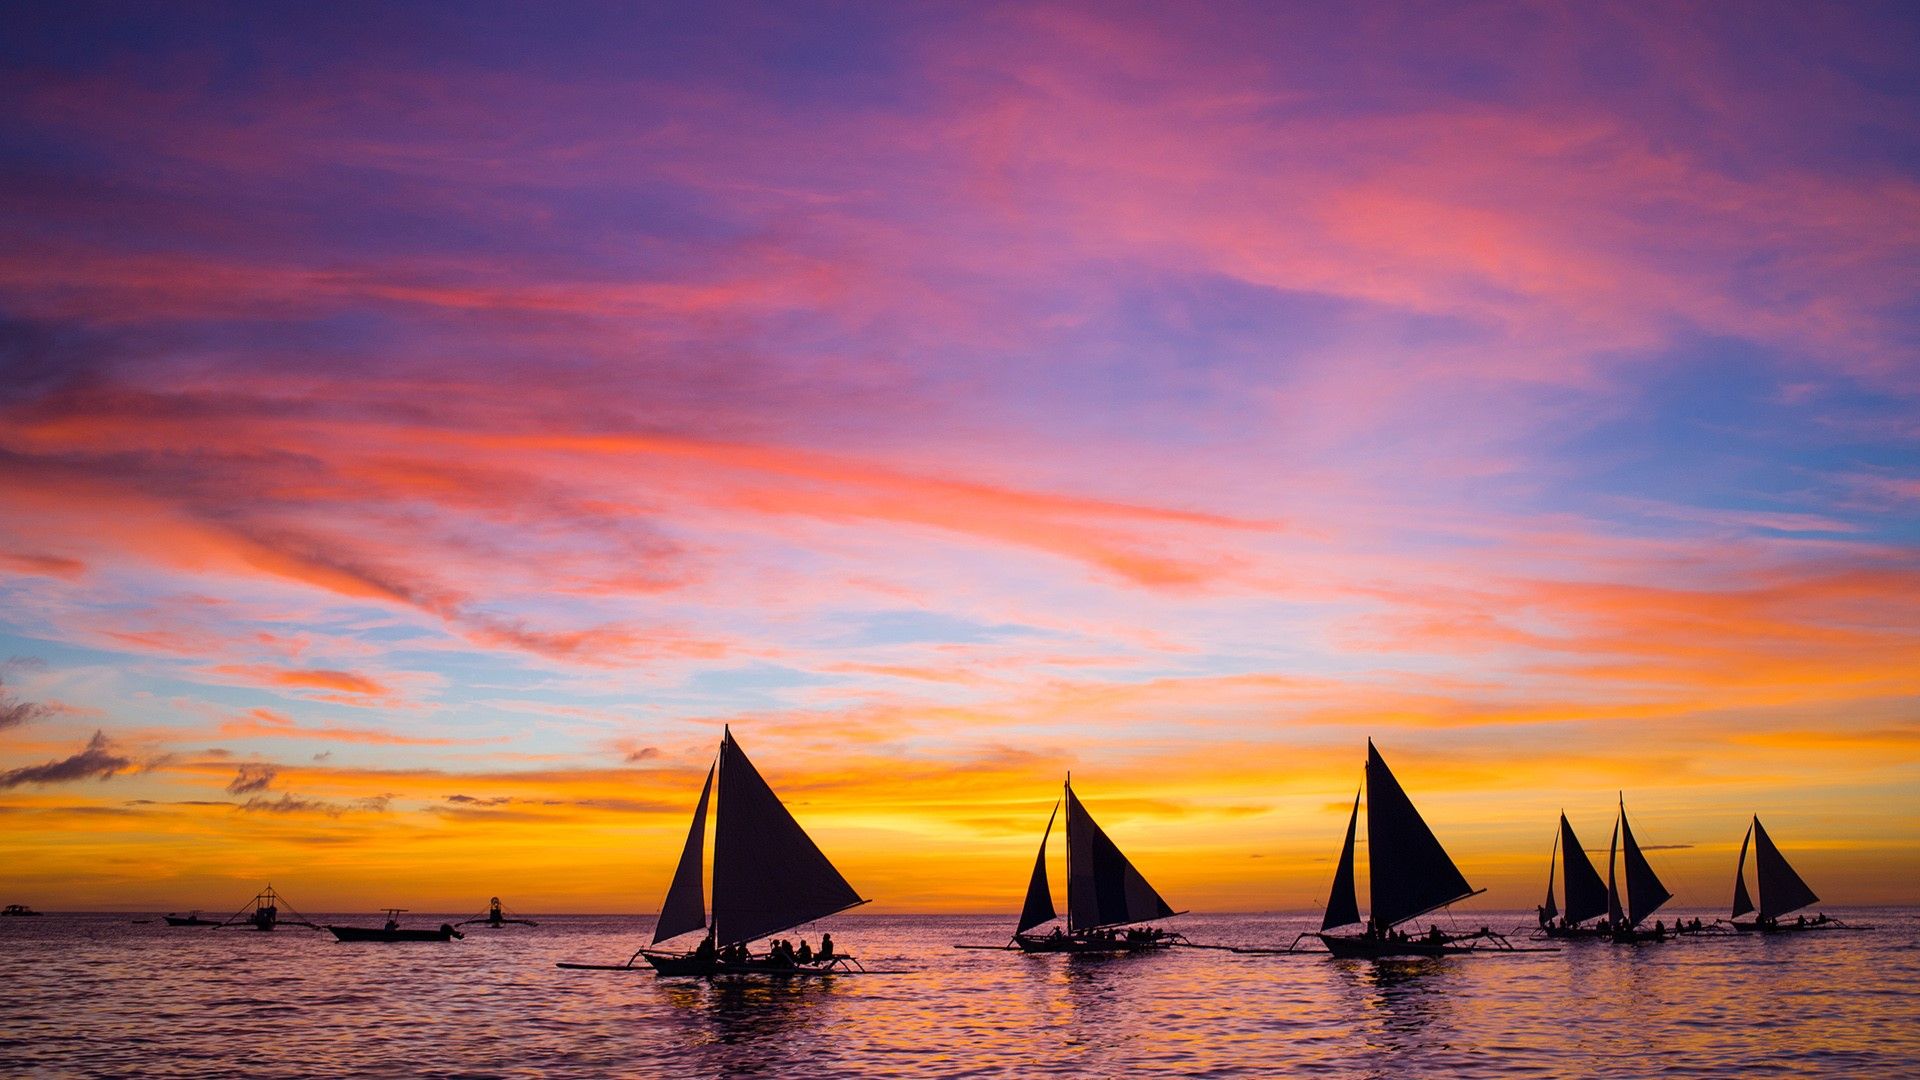 Sailing boats in the sea at sunset, Boracay, Philippines. Windows 10 Spotlight Image